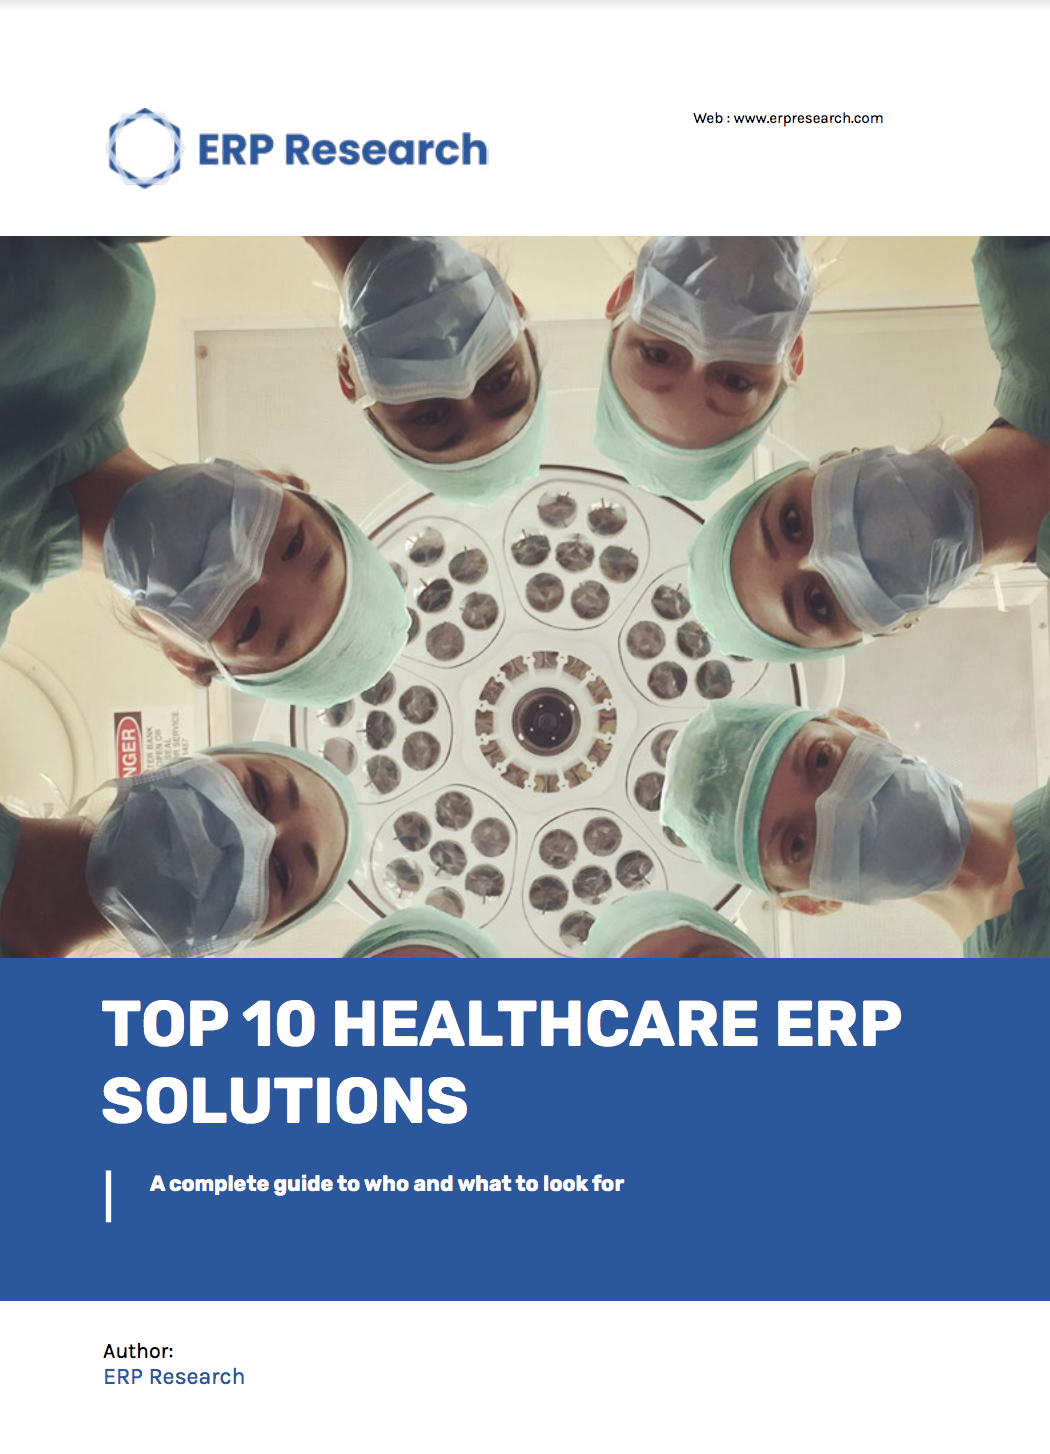 Top 10 enterprise resource planning software for healthcare ERP 2022 report.